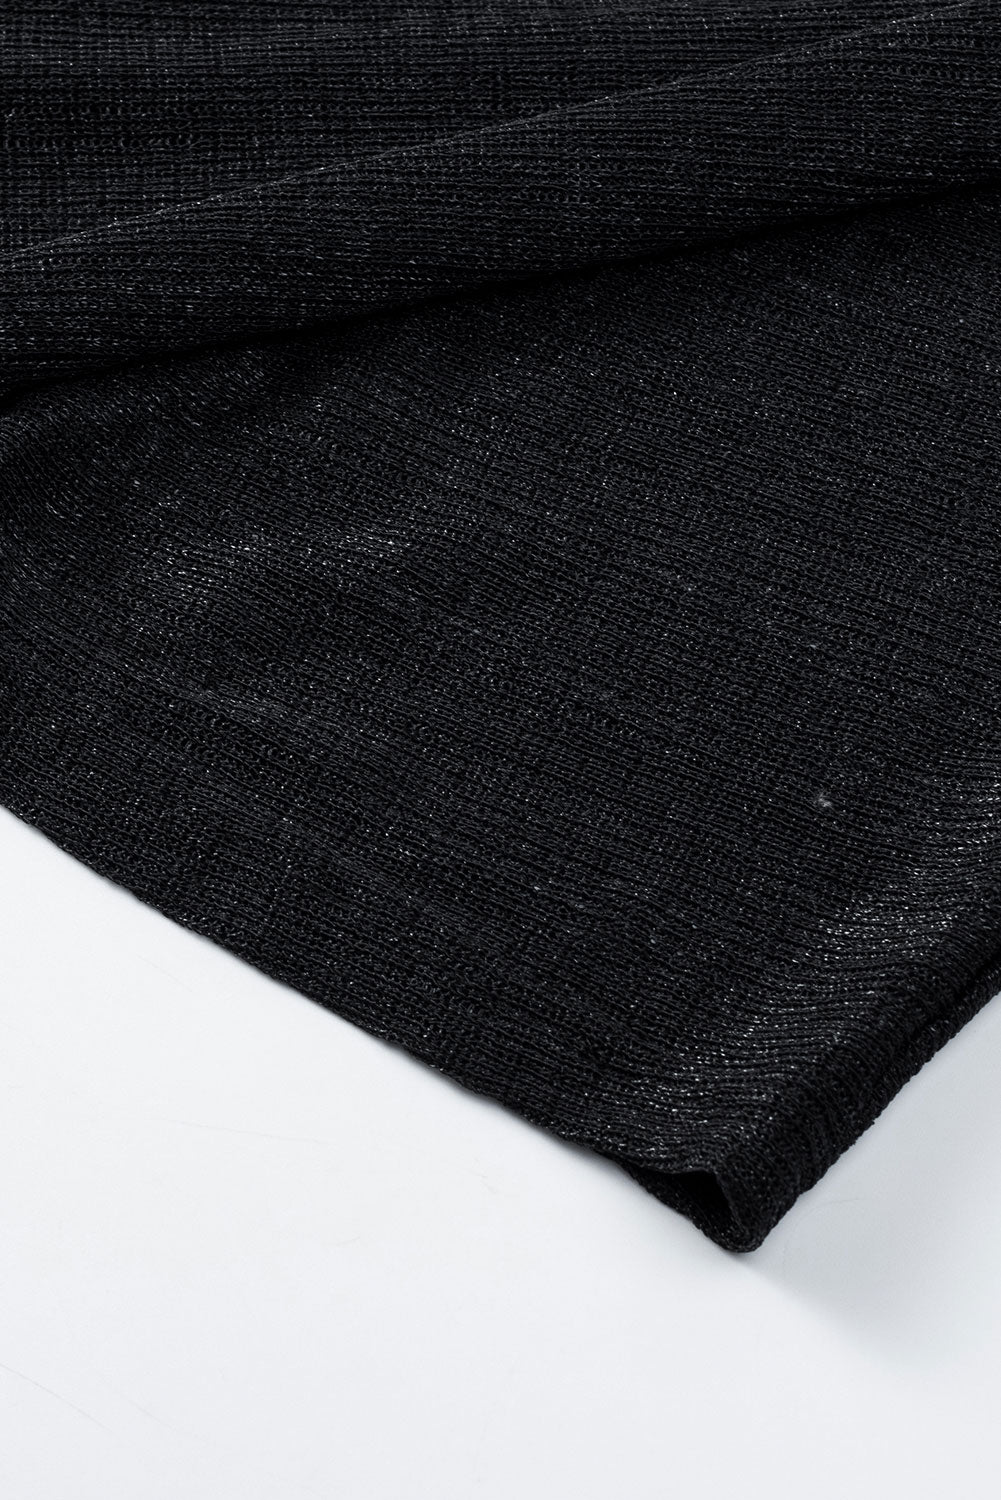 Black Sheer Lightweight Knit Long Sleeve Cardigan